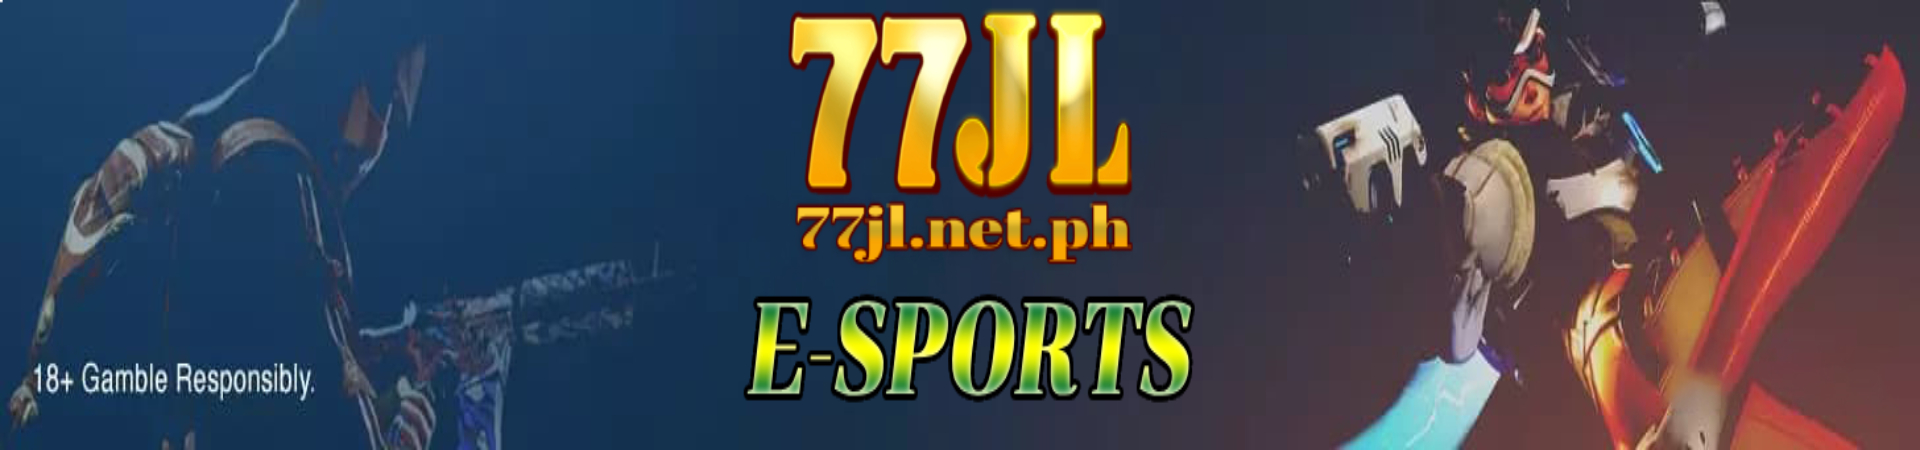 esports 77jl banner